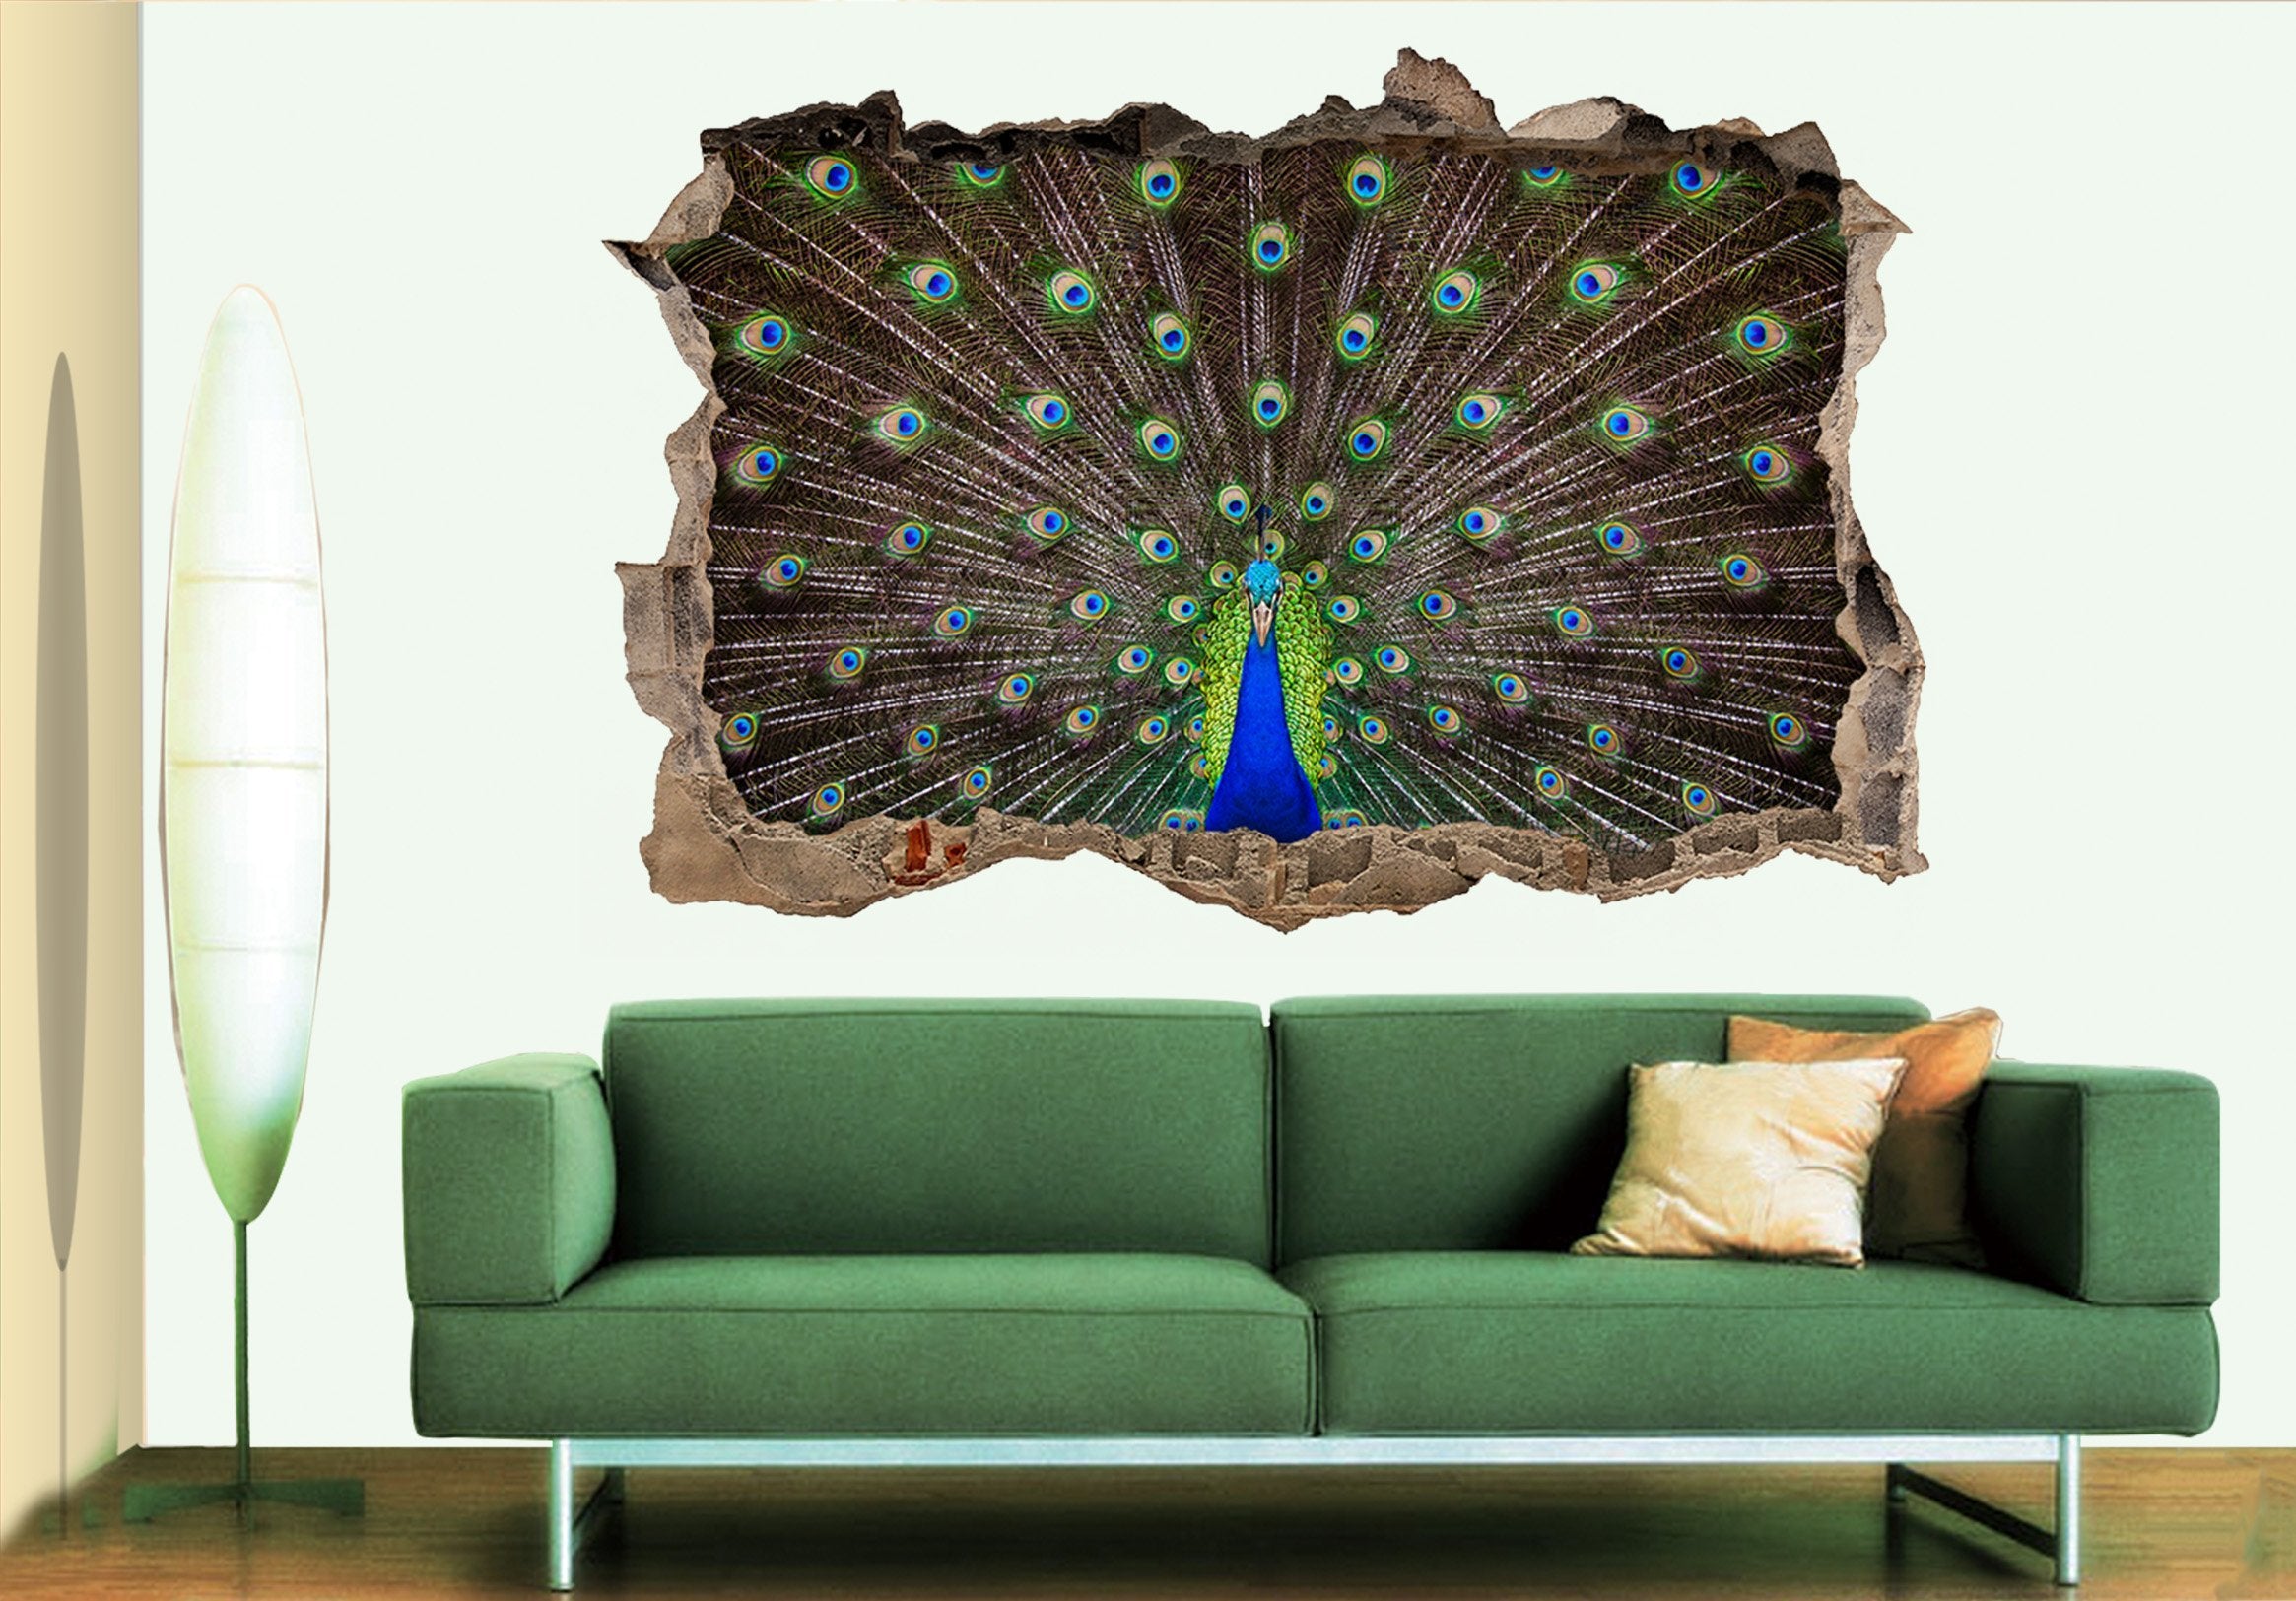 3D Opening Tail Peacock 174 Broken Wall Murals Wallpaper AJ Wallpaper 